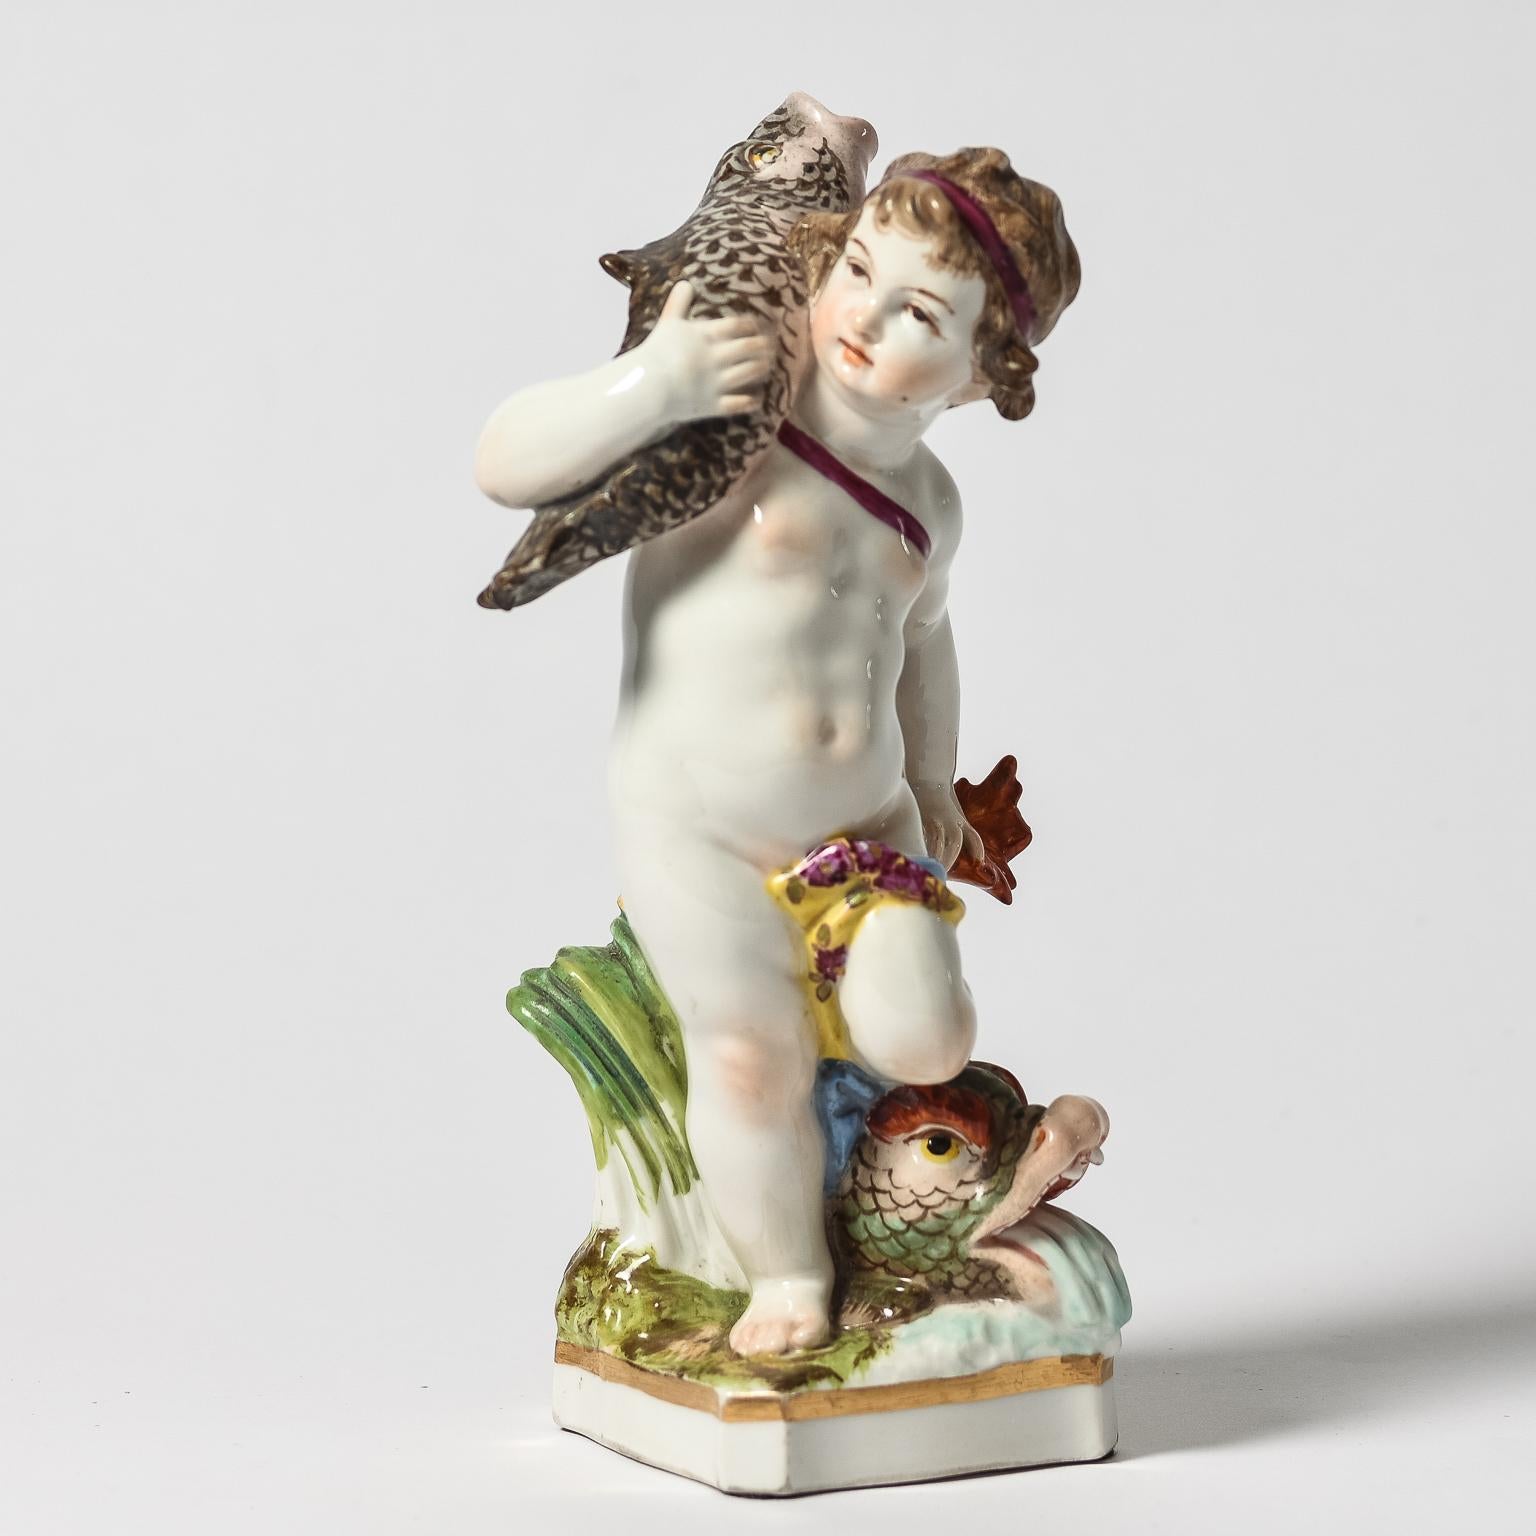 Mid-19th Century Suite of 4 Charming Porcelain Figural Sculptures by KPM. Antique, circa 1850